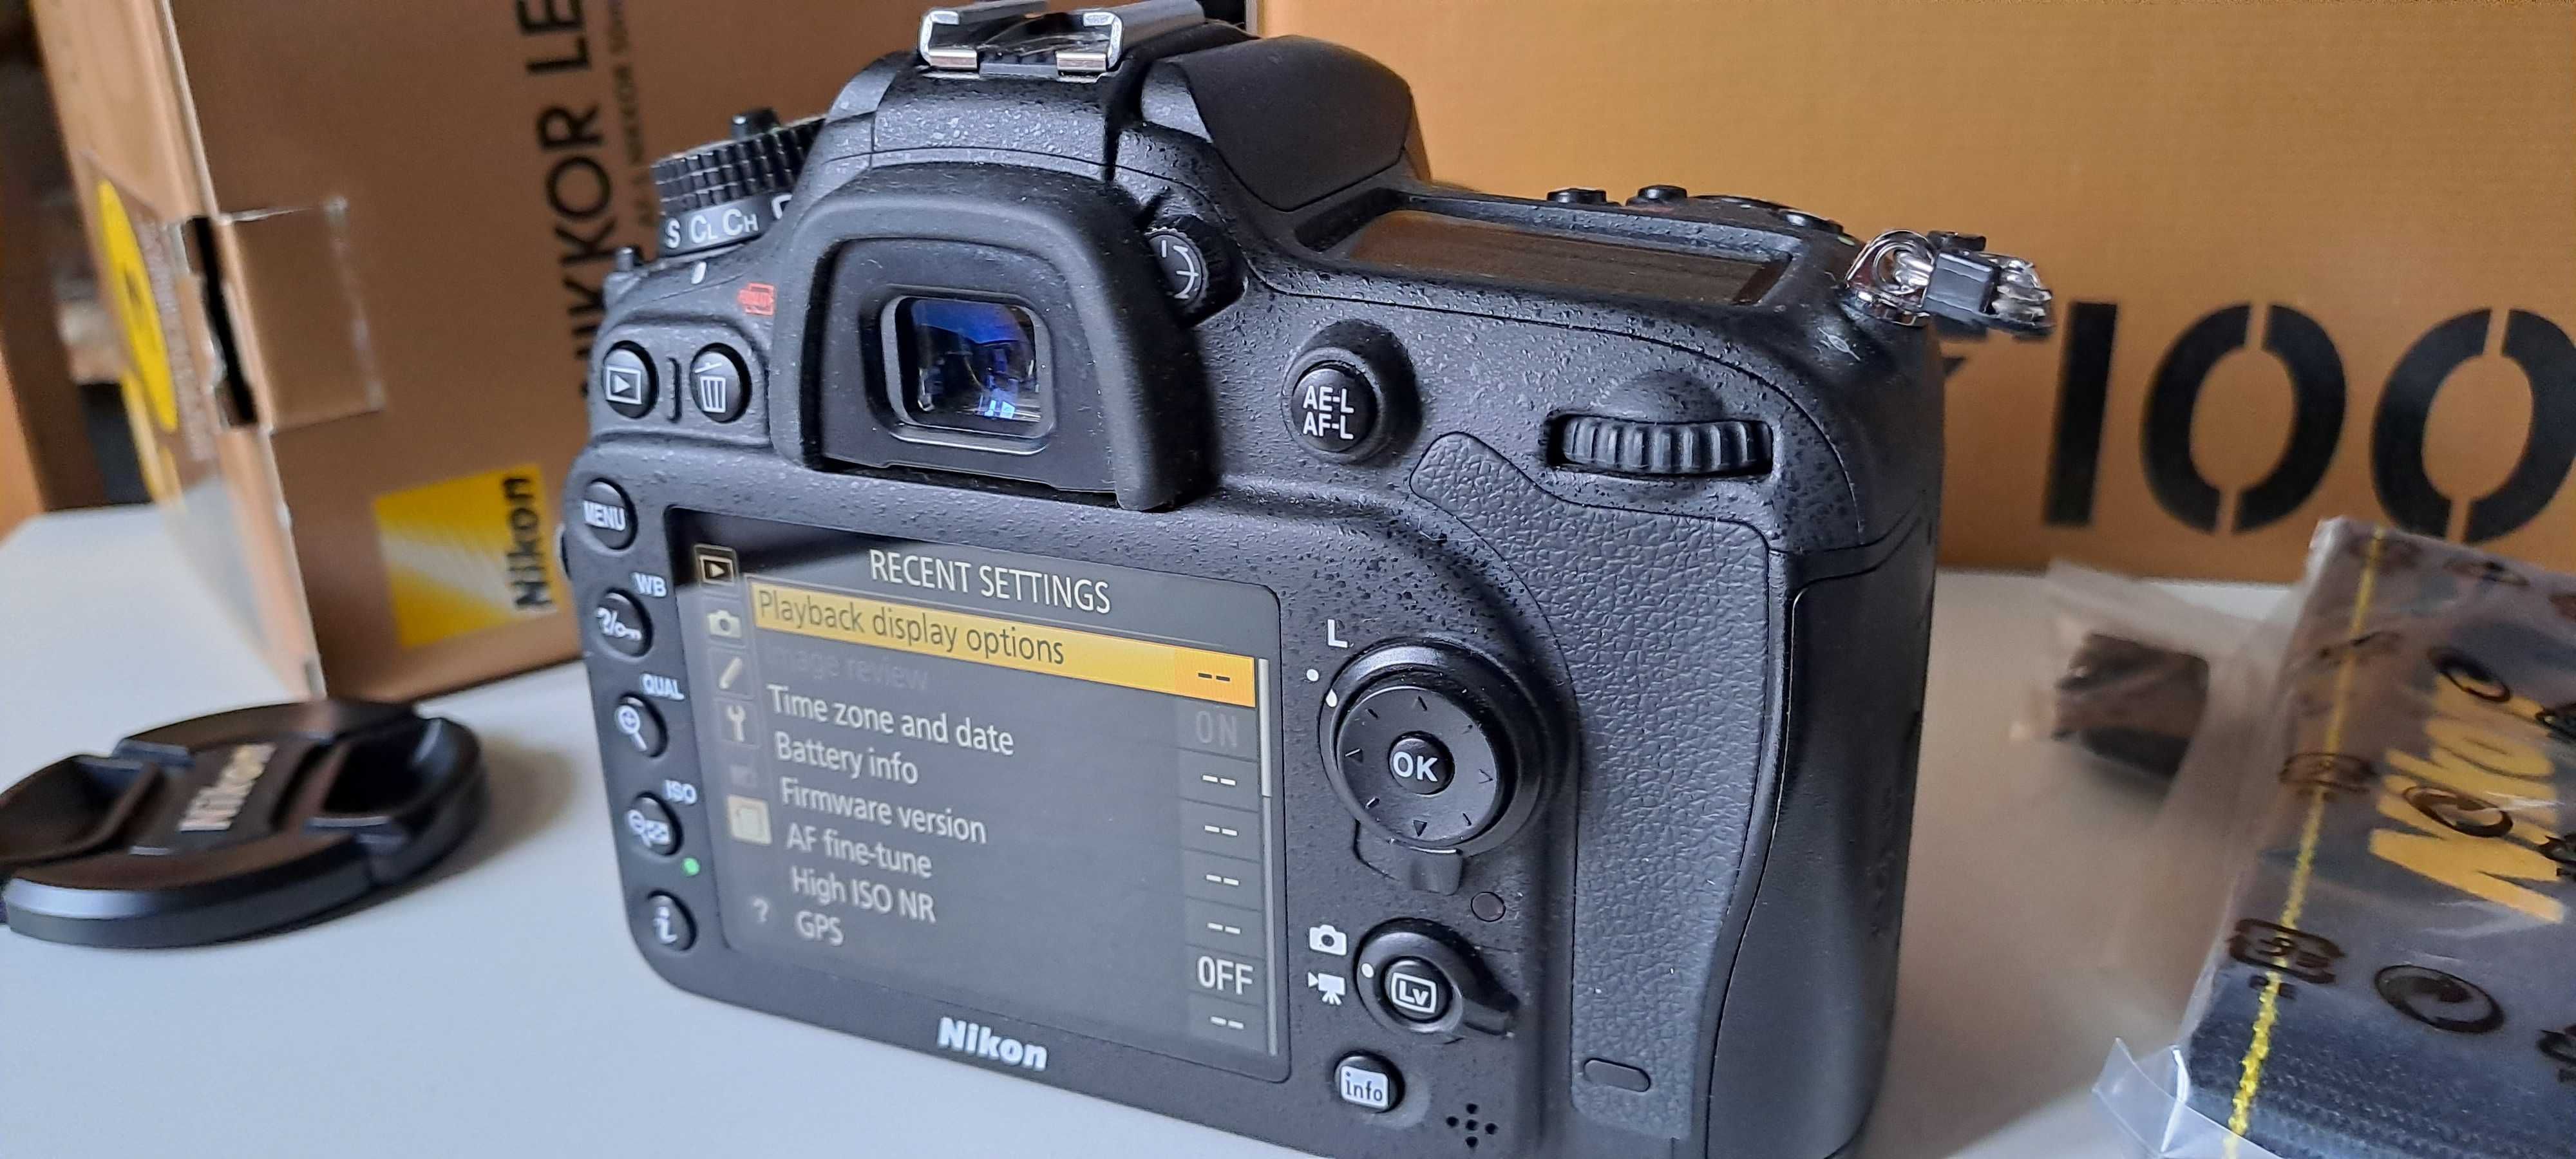 Vand Dslr Nikon 7100 si obiectiv 50 mm 1.8